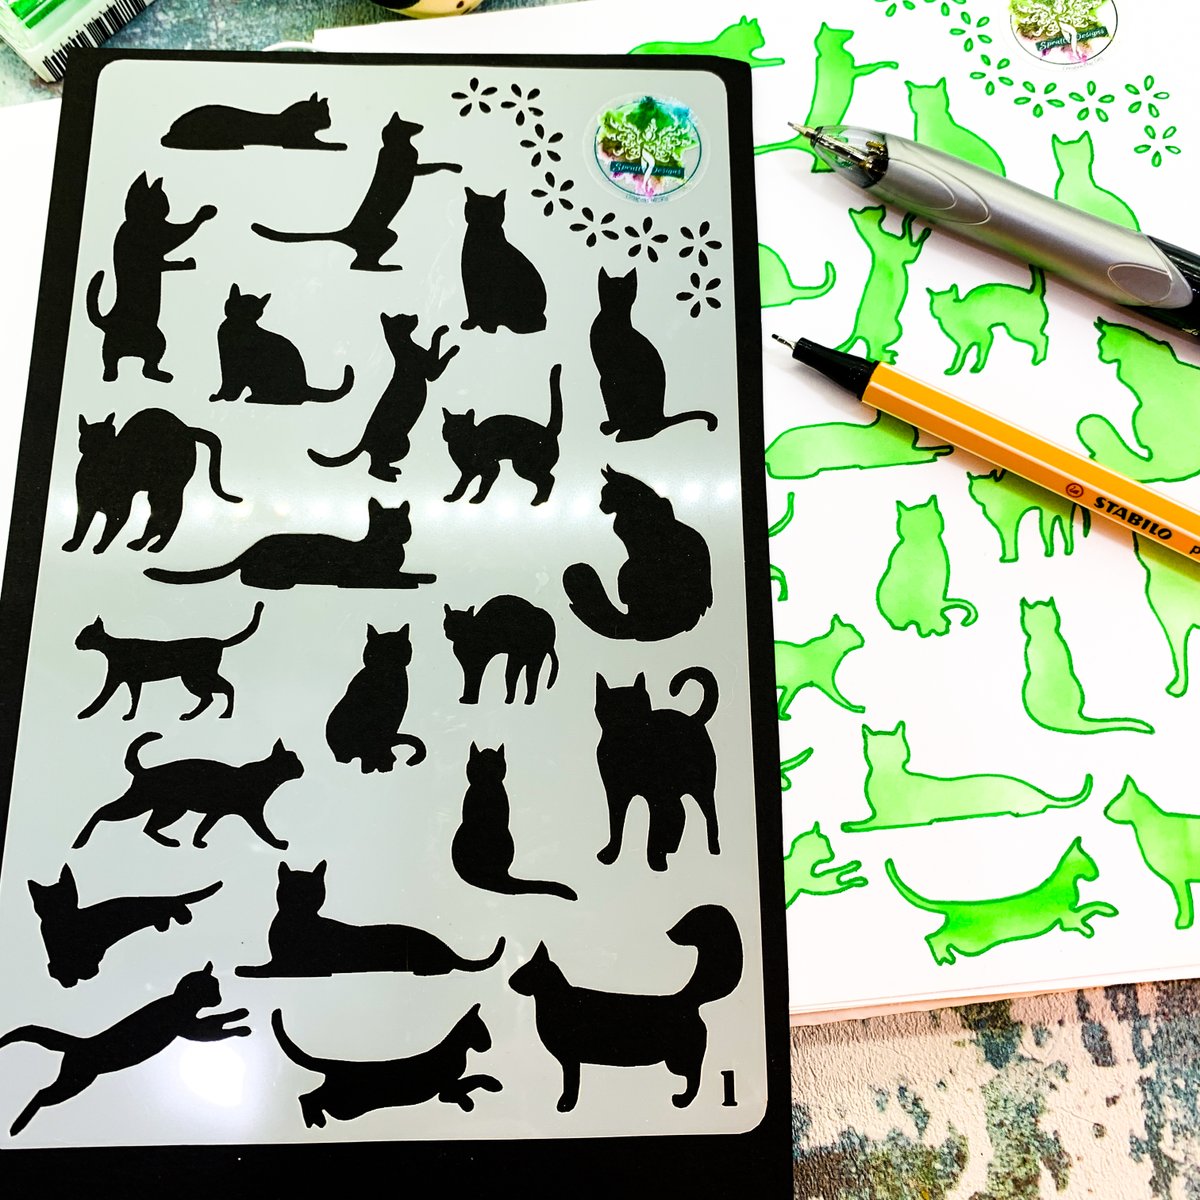 New to my Etsy Shop Cats Journal Stencil (Design 1), Feline Pets Arts Crafts stencil by SprattsDesigns etsy.me/3vMtxpq 
🐈‍⬛
via @Etsy #EarlyBiz #Journal